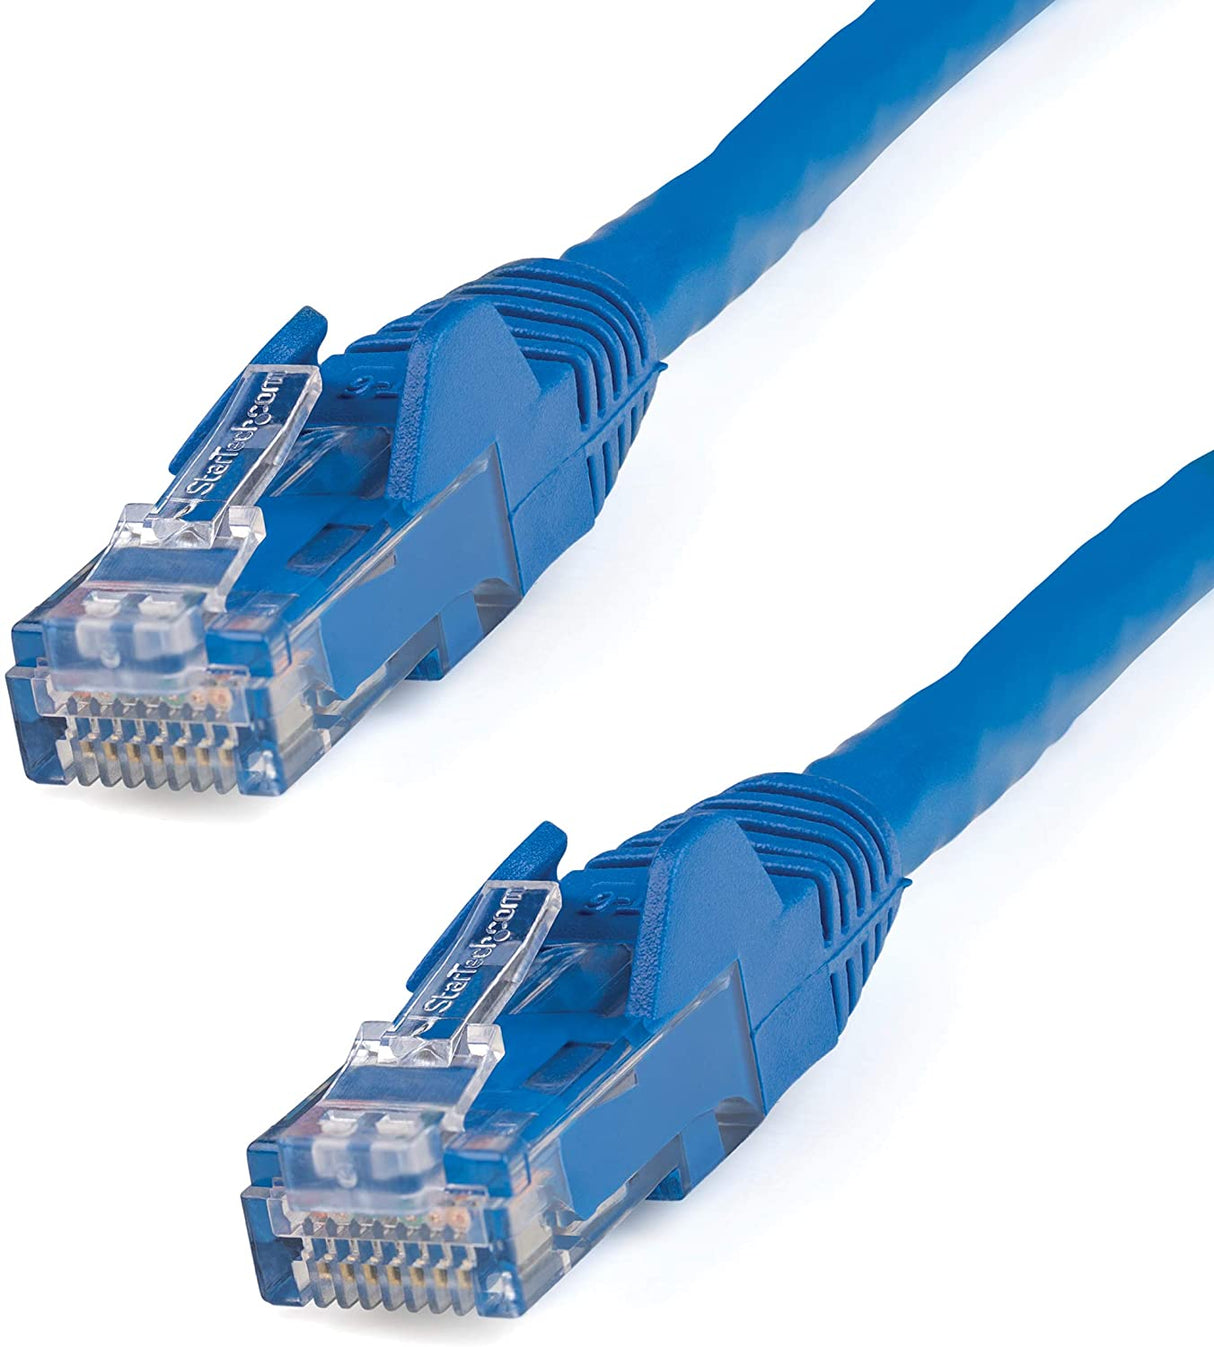 StarTech.com 7 ft. CAT6 Ethernet Cable - 10 Pack - ETL Verified - Blue CAT6 Patch Cord - Snagless RJ45 Connectors - 24 AWG Copper Wire - UTP Ethernet Cable (N6PATCH7BL10PK) Blue 7 ft / 2.1 m 10 Pack